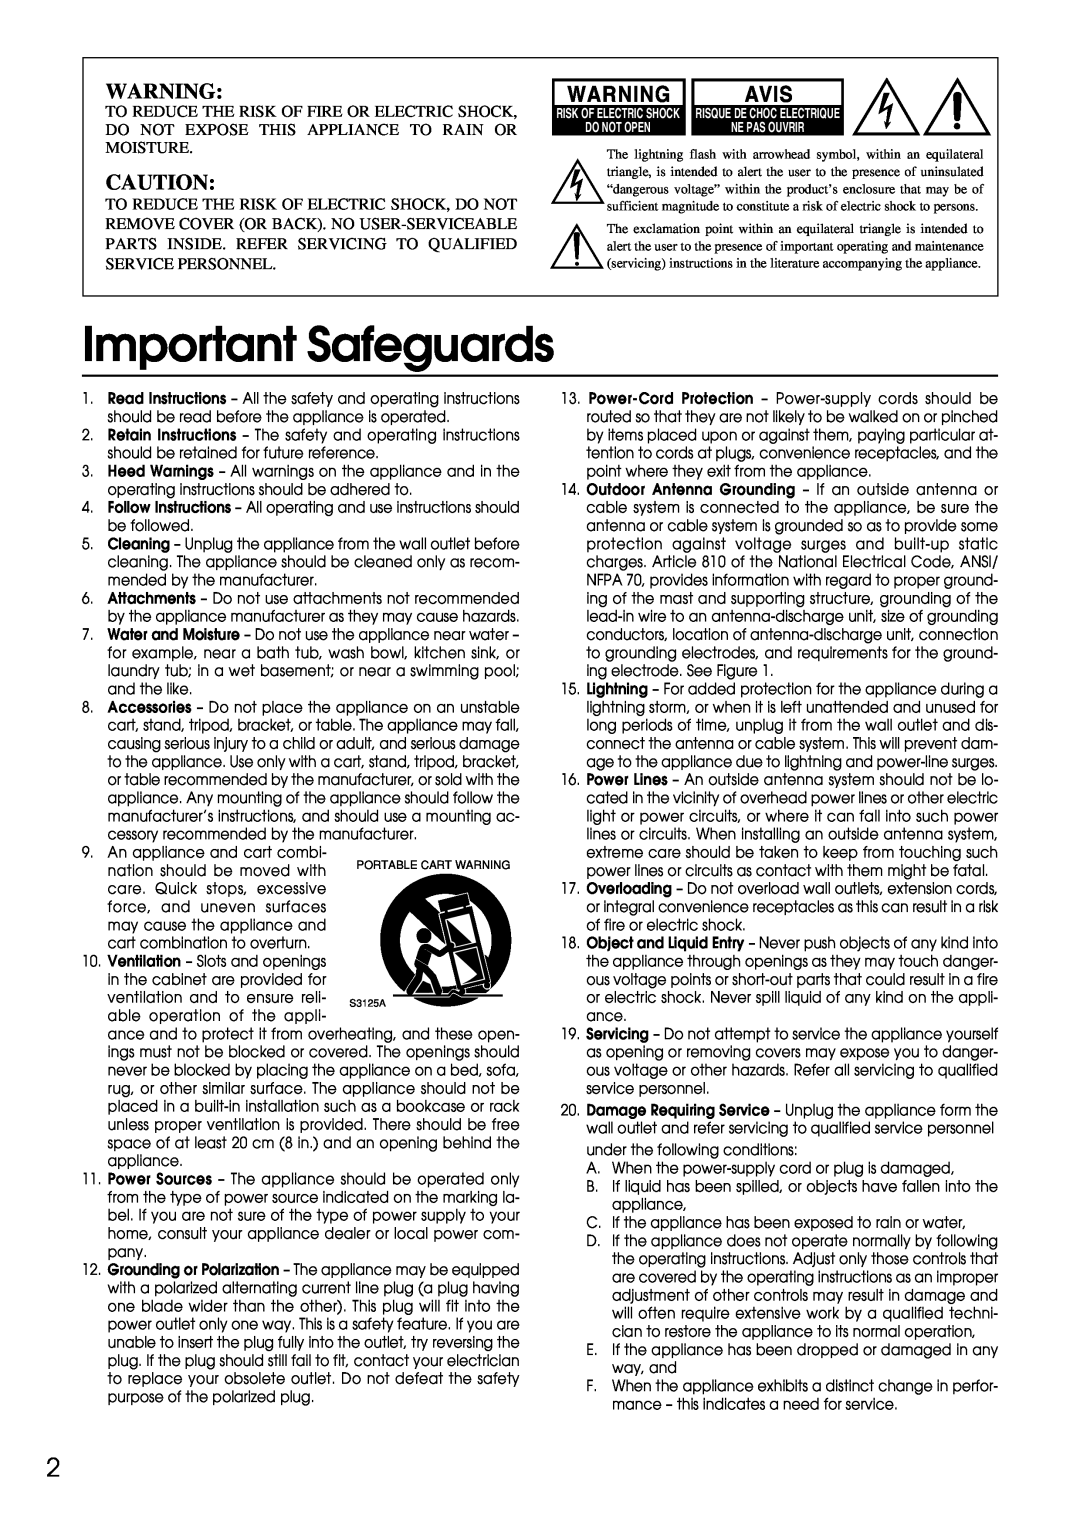 Integra DTR-9.1 appendix Important Safeguards, Avis 